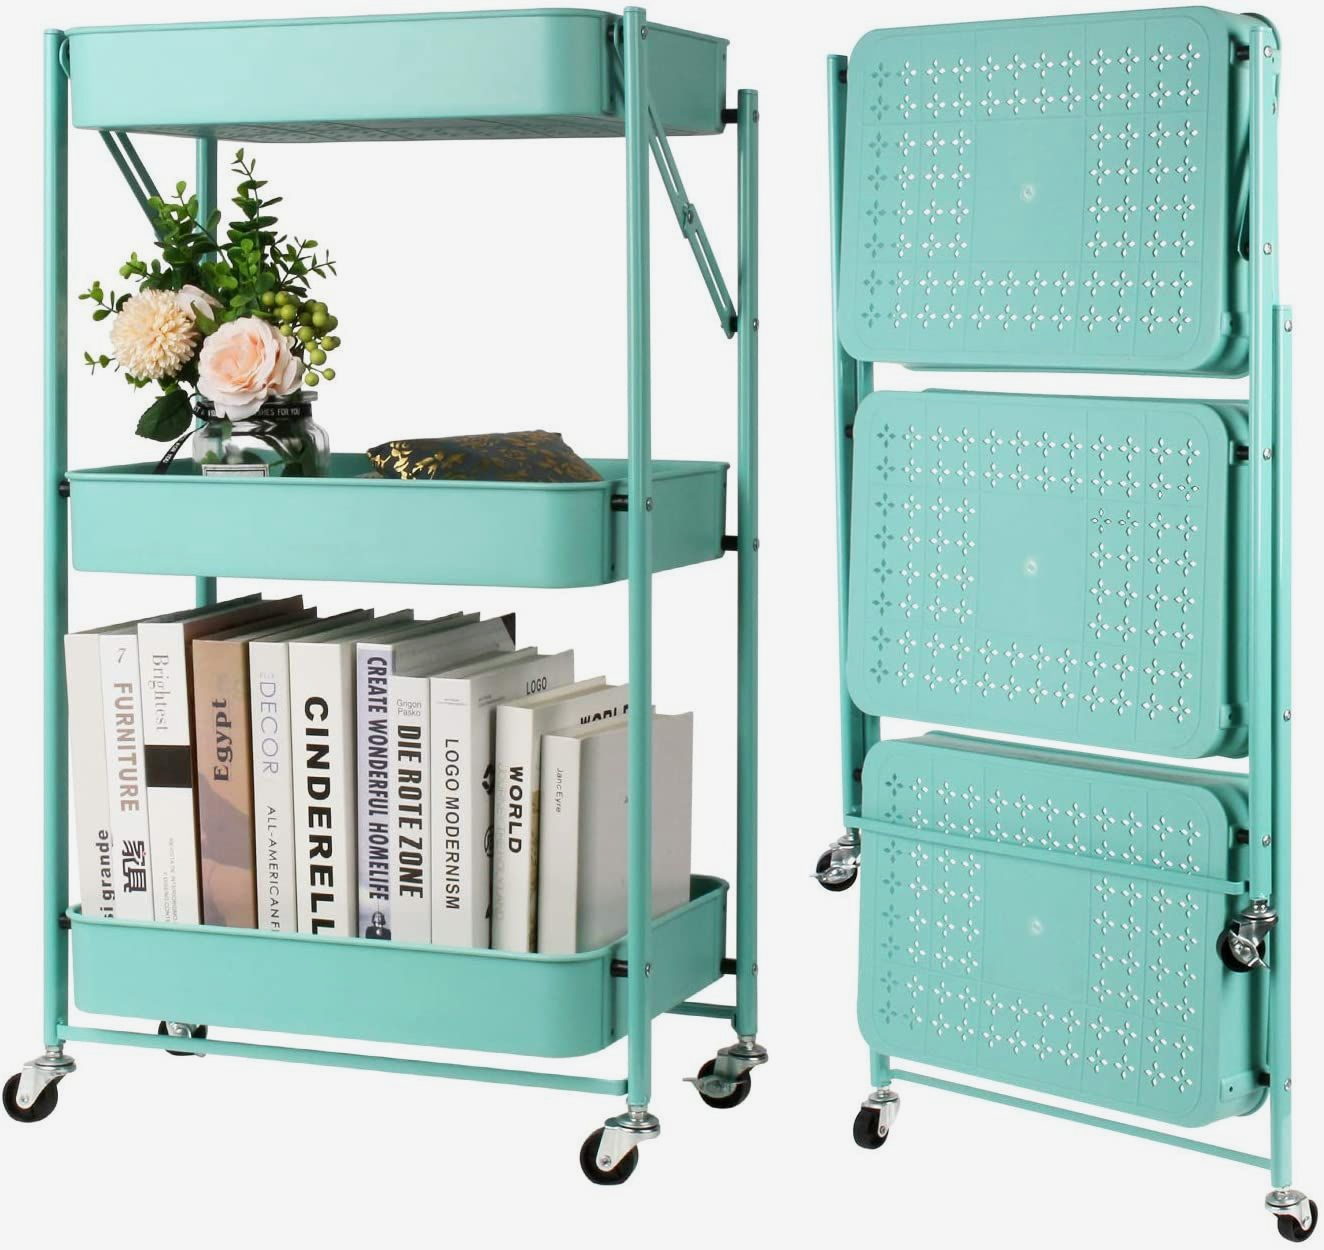 Todeco-3-Tier-Cart-Storage-Rack-Rolling-Storage-Cart-Organizer-for-Kitchen-Bathroom-Mobile-Storage-Organizer-with-Wheels-Green